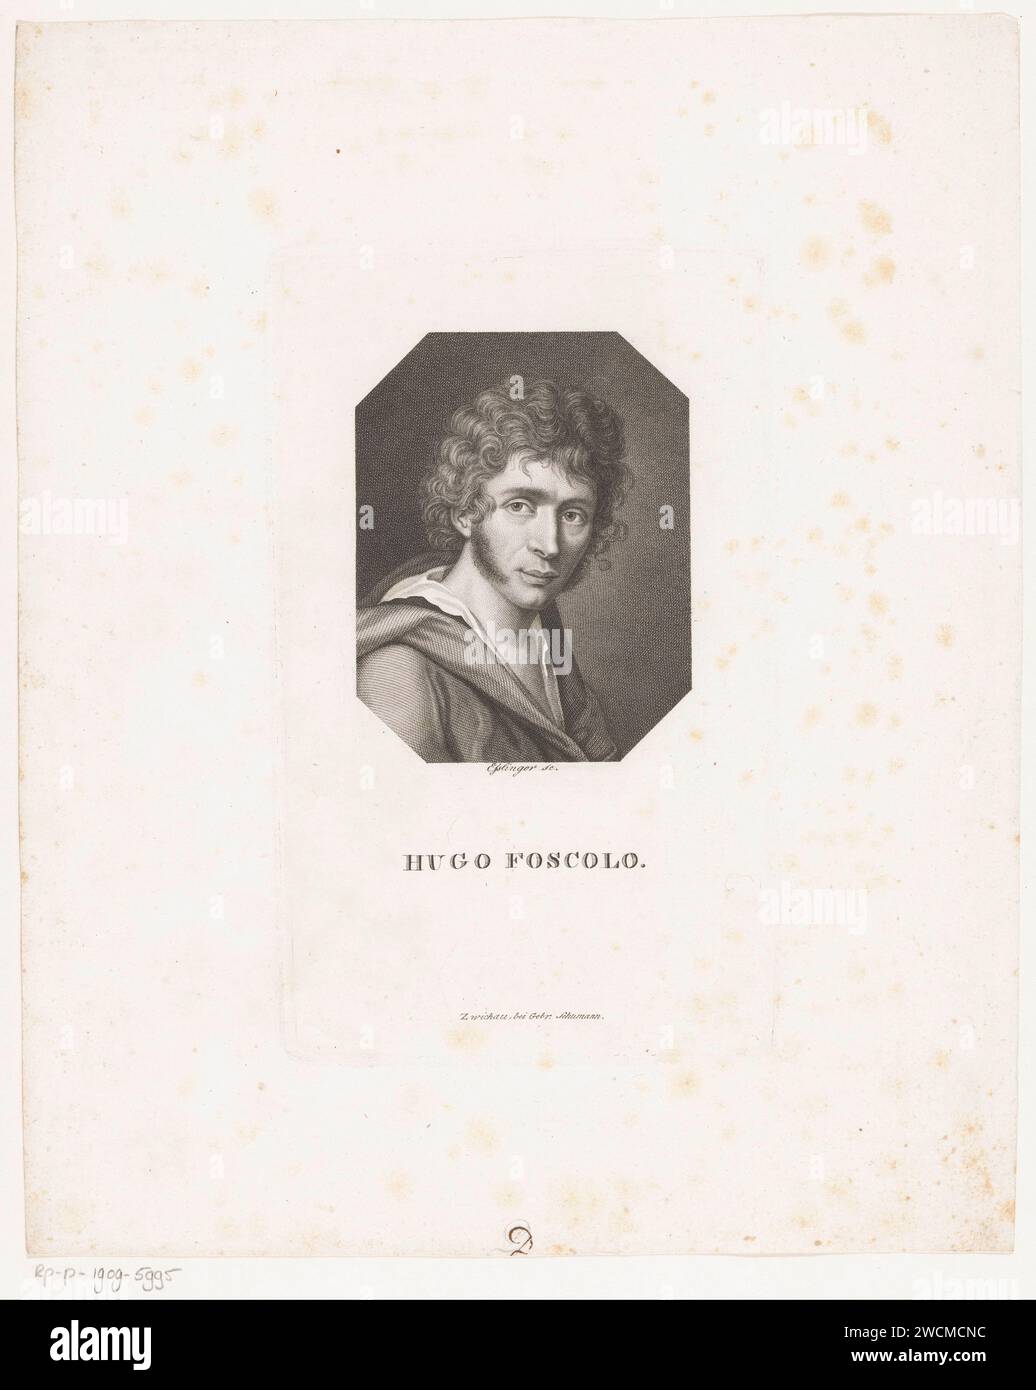 Portret van Ugo Foscolo, Martin Esslinger, 1818 - 1832 print  Zwickau paper steel engraving historical persons Stock Photo